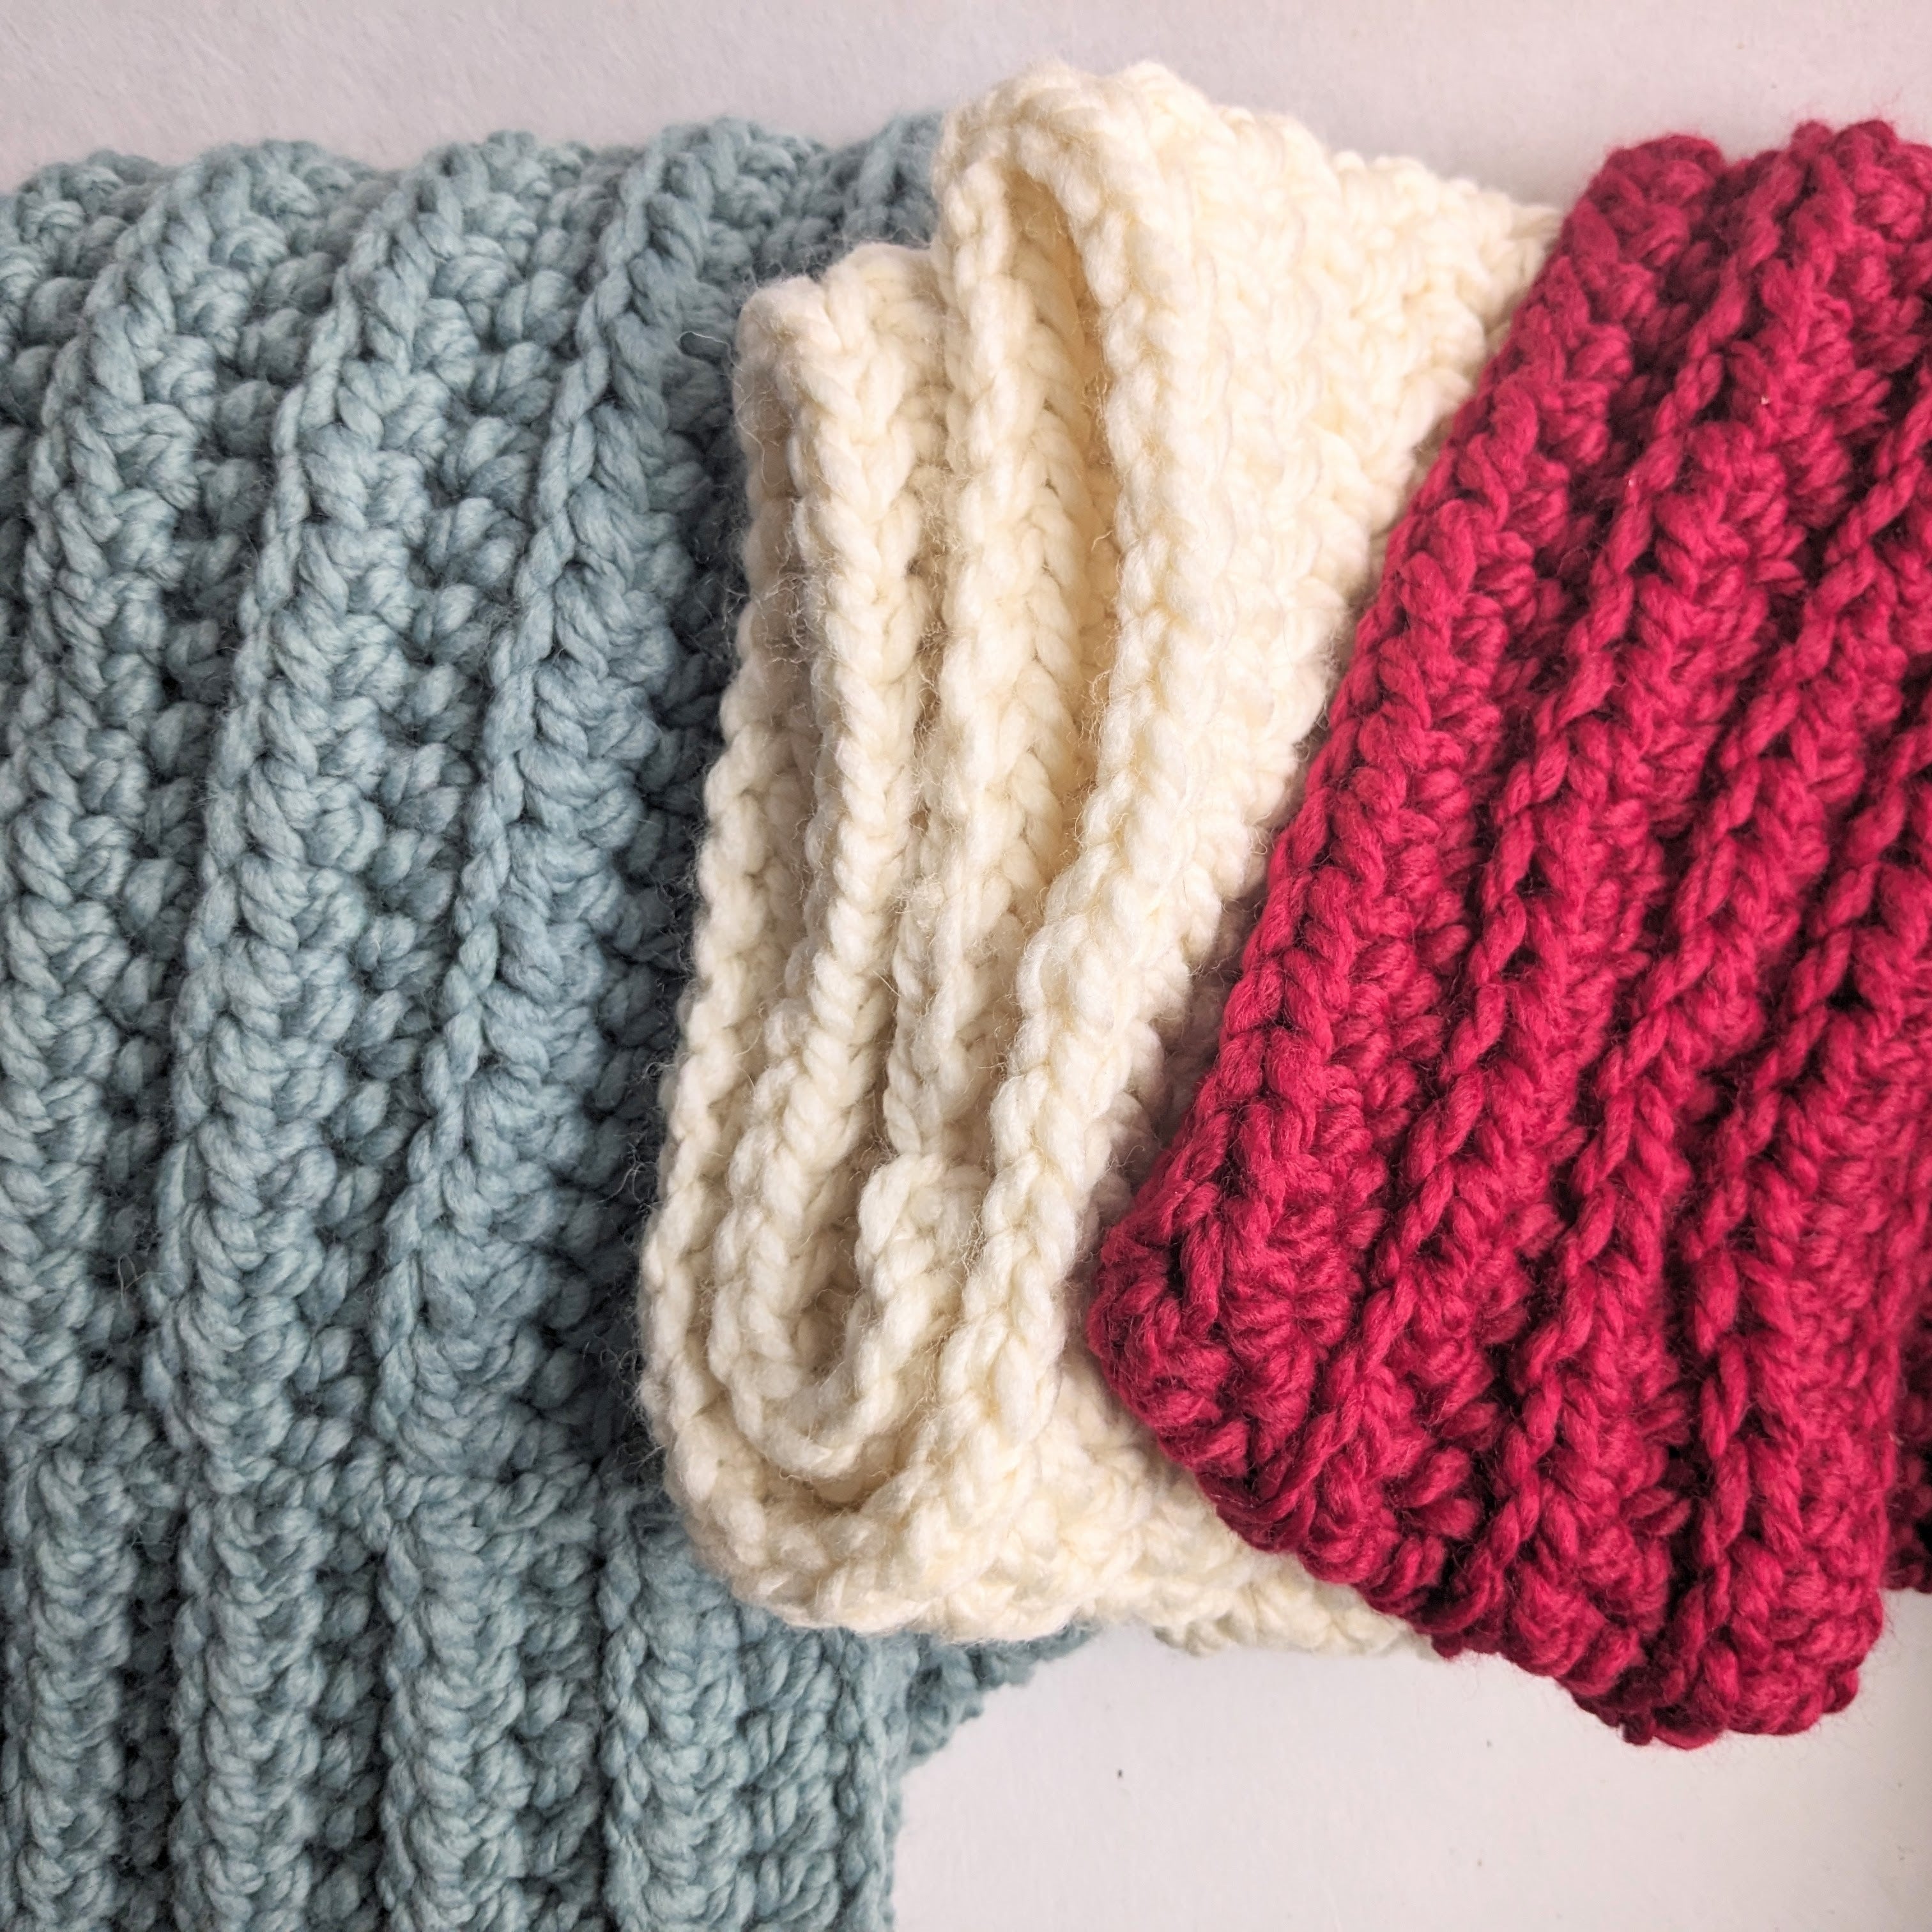 Seasonal Crochet Kit: Holiday Hooks - Fall Themed Learn to Crochet